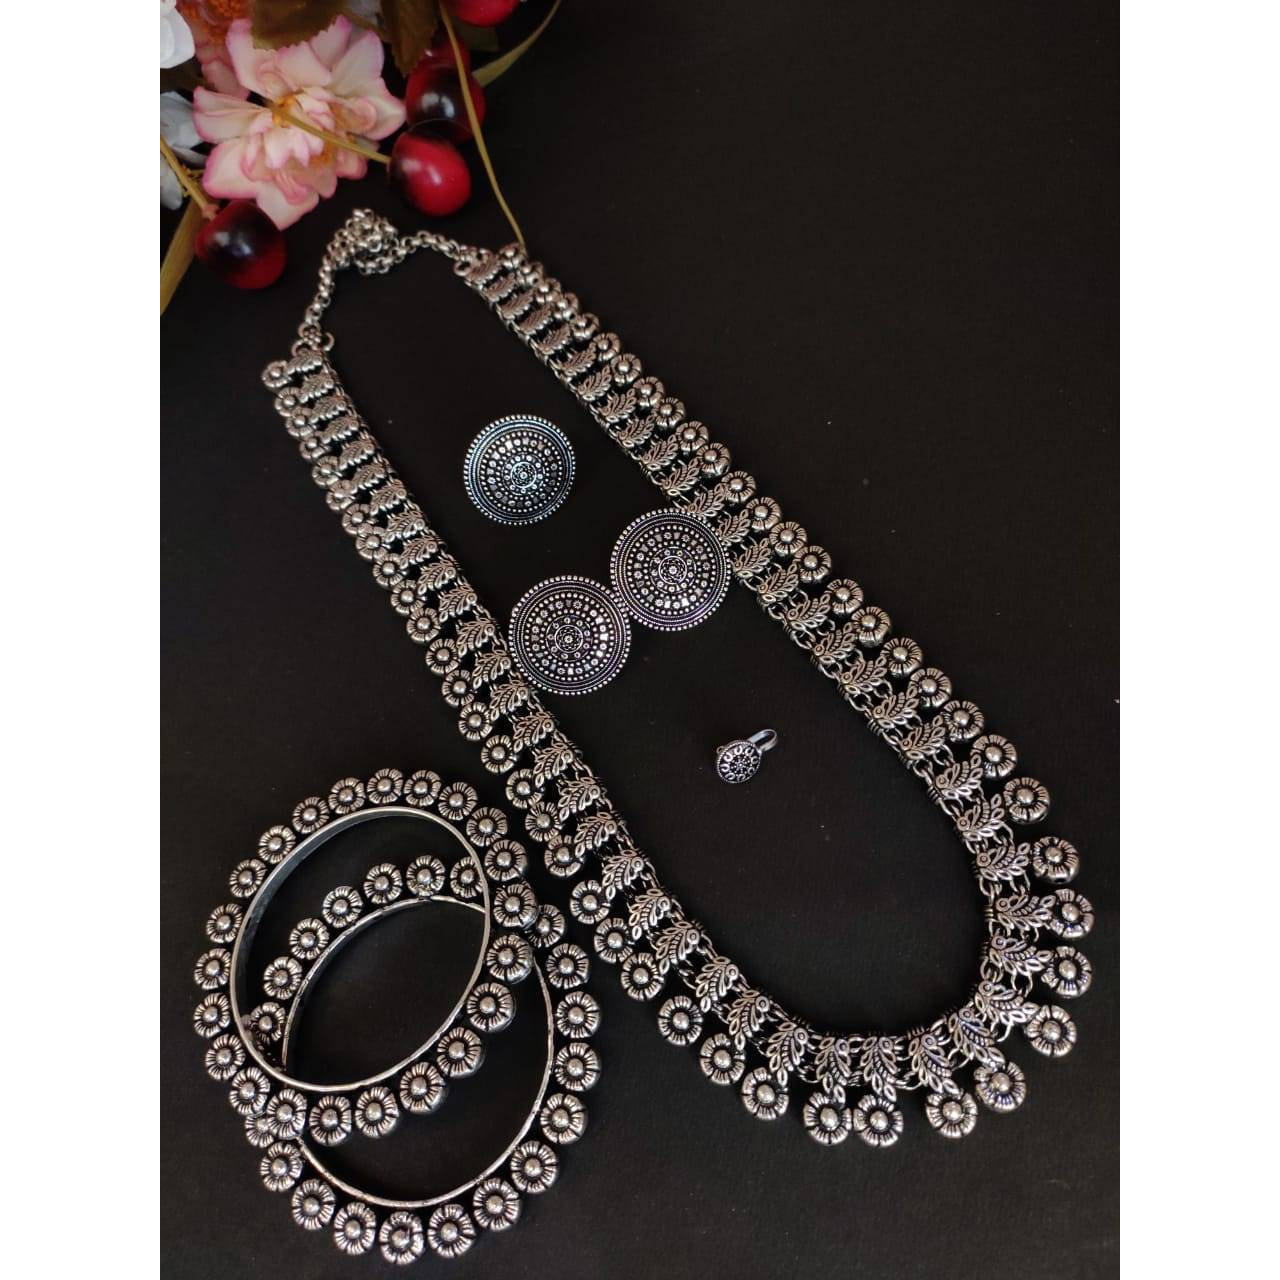 Long Necklace Set, Oxidised Necklace Set, Indian Ethnic  Jewelry, Oxidized Jewelry Set, Temple Jewelry, Wedding Jewelry, Bridal Jewelry